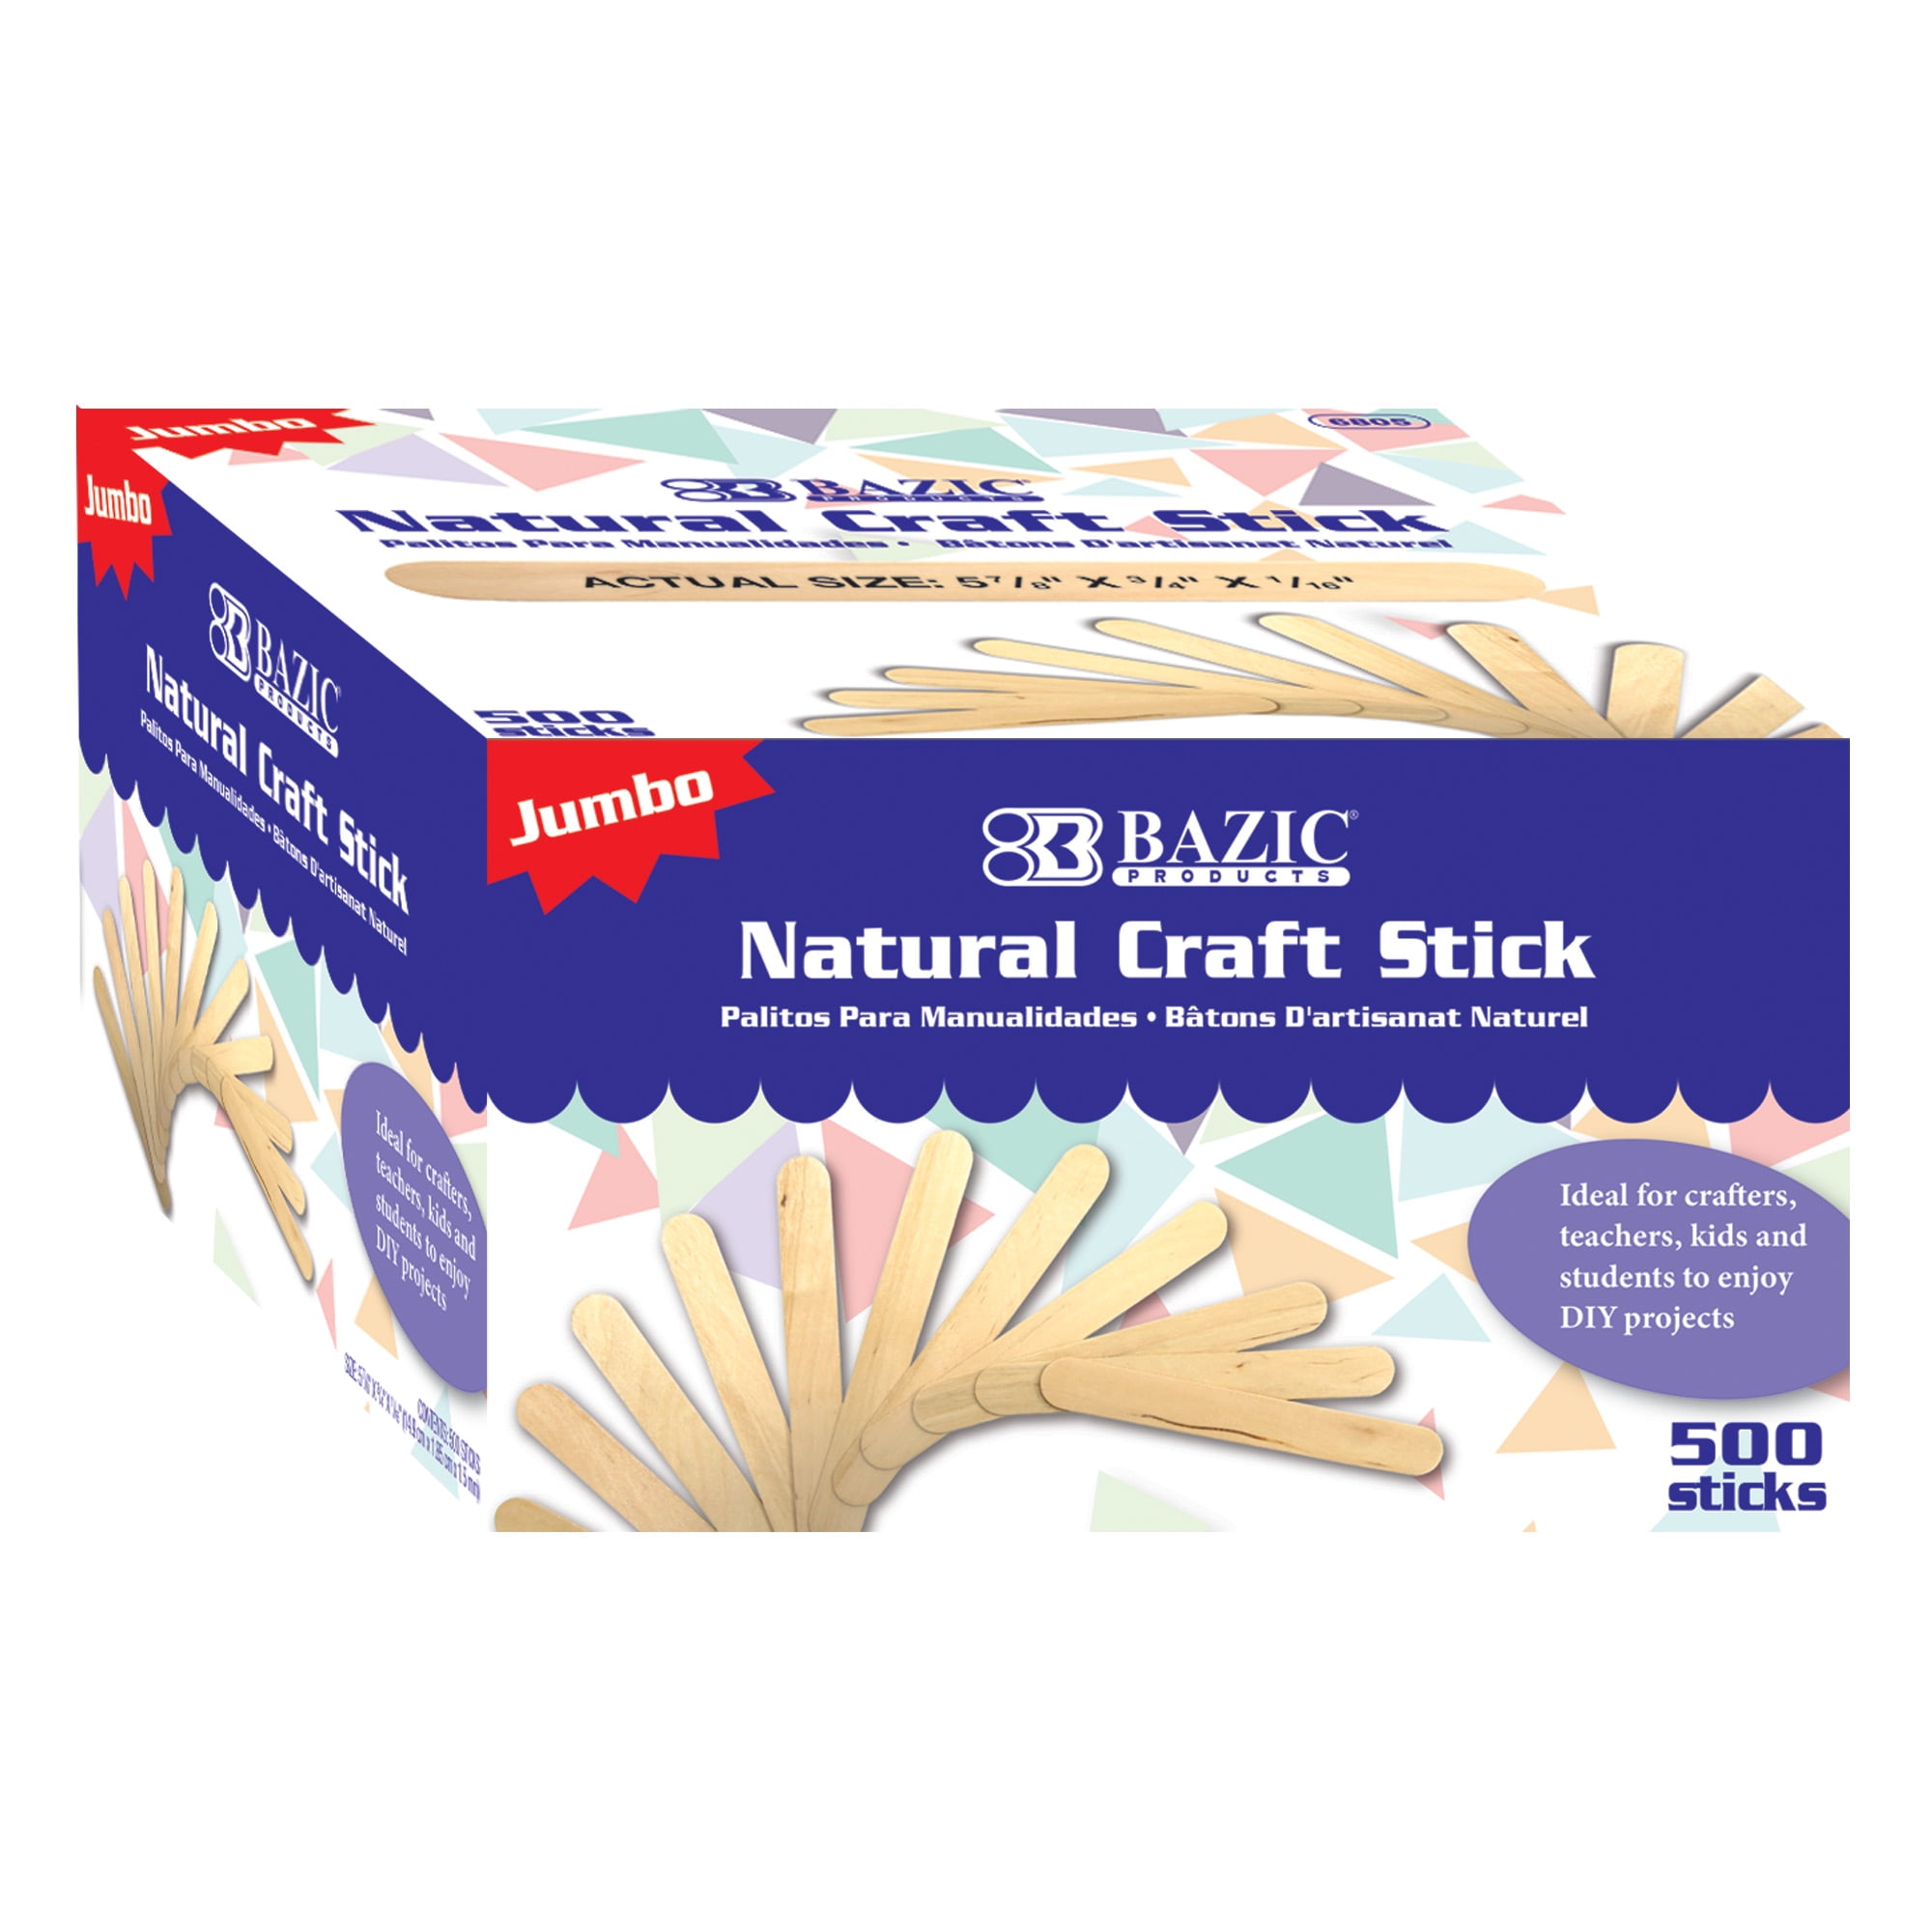  BAZIC Premium Jumbo Glue Stick 36g/1.27 Oz, Multi-Purpose Acid  Free, Glue Sticks, for Photos Paper Kids Art Craft at School Home Office,  1-Pack : Arts, Crafts & Sewing